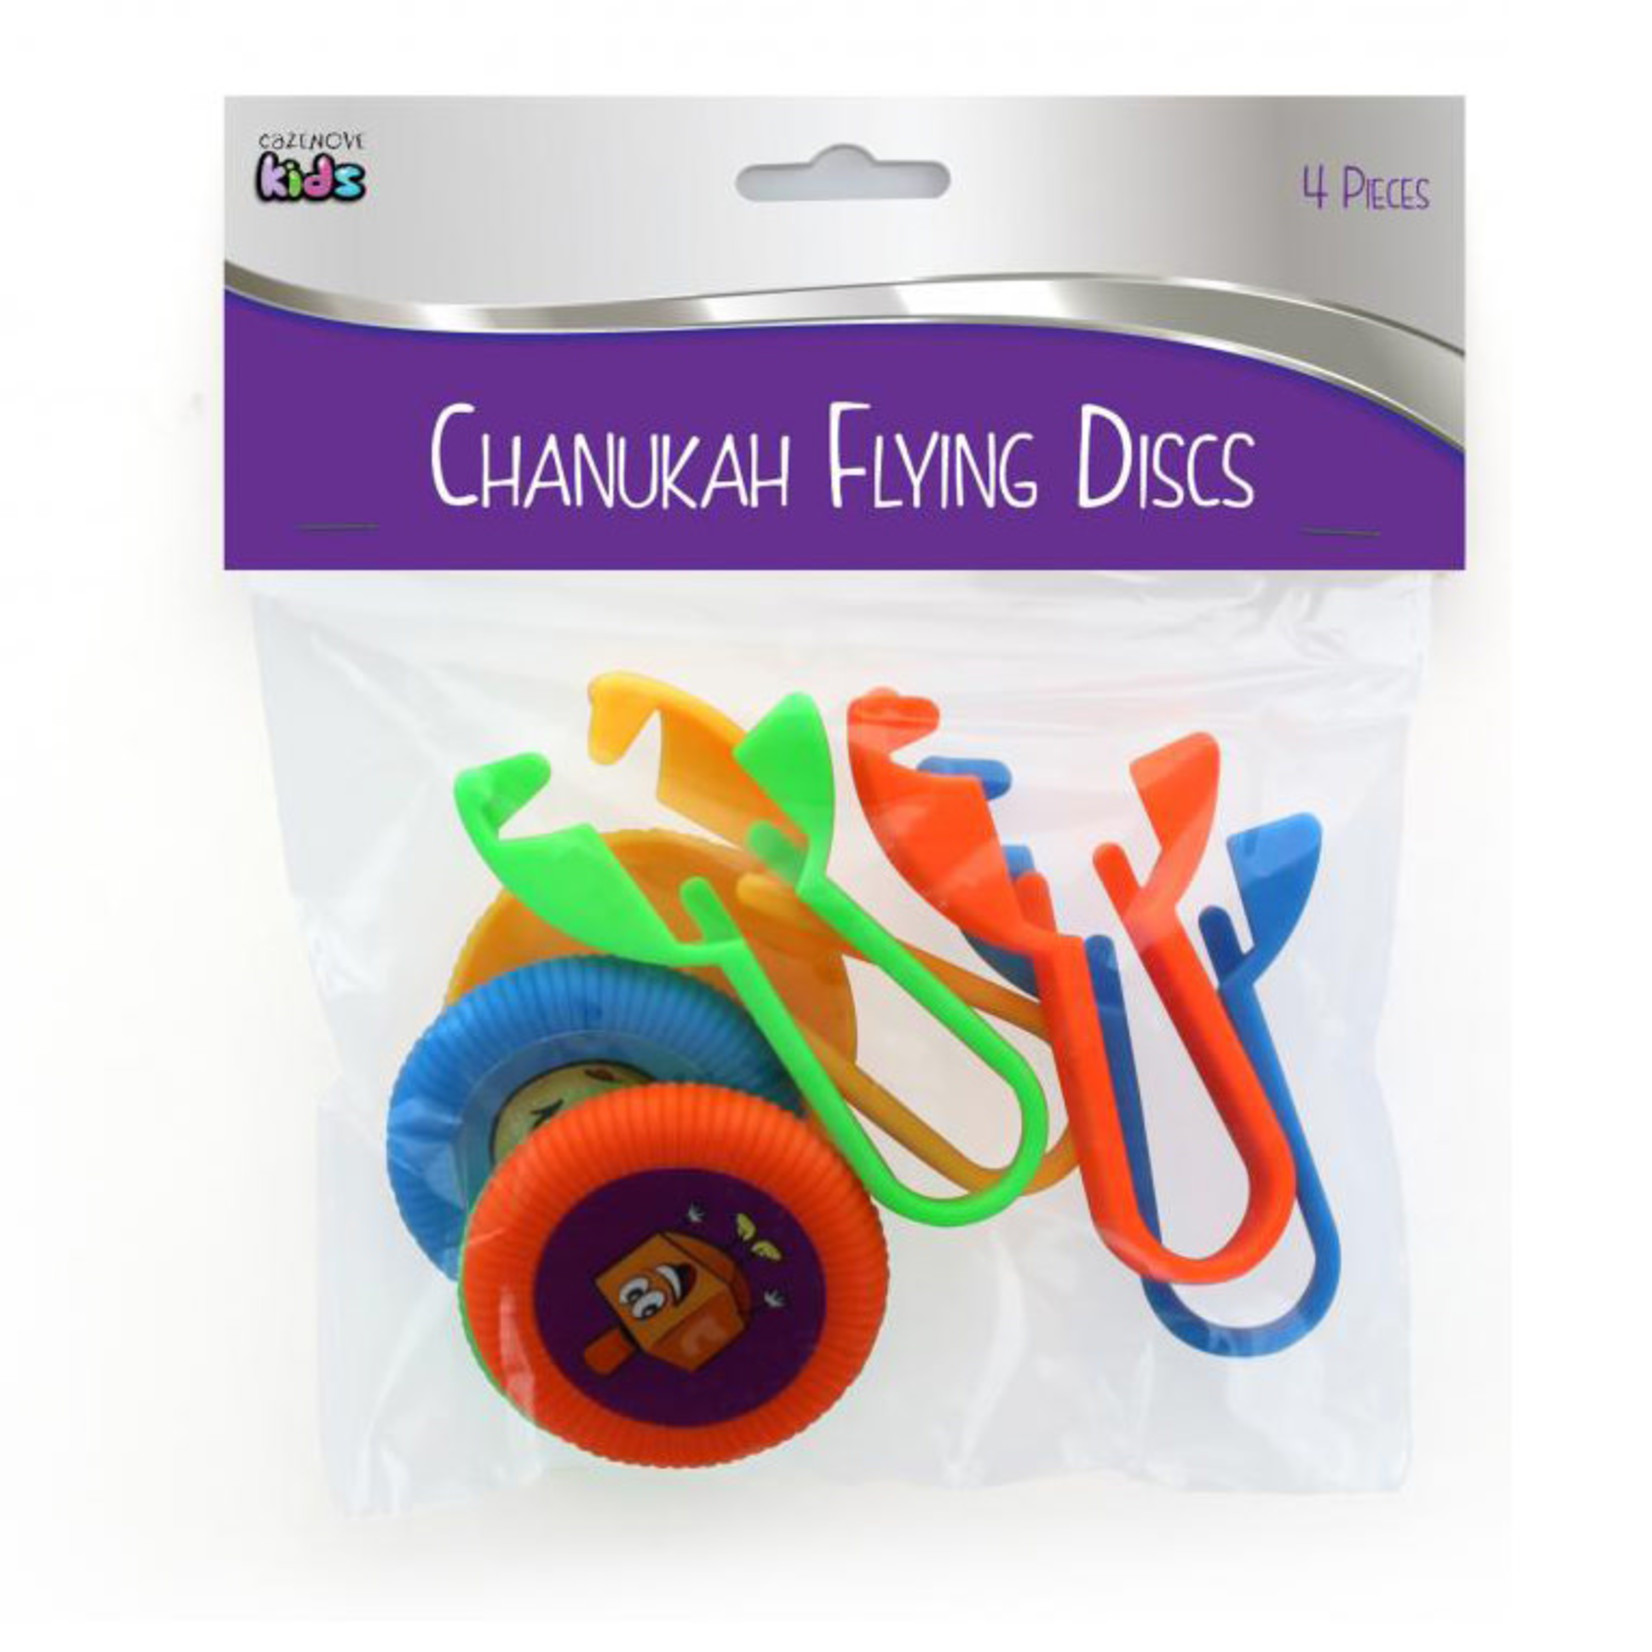 Chanukah Flying Discs